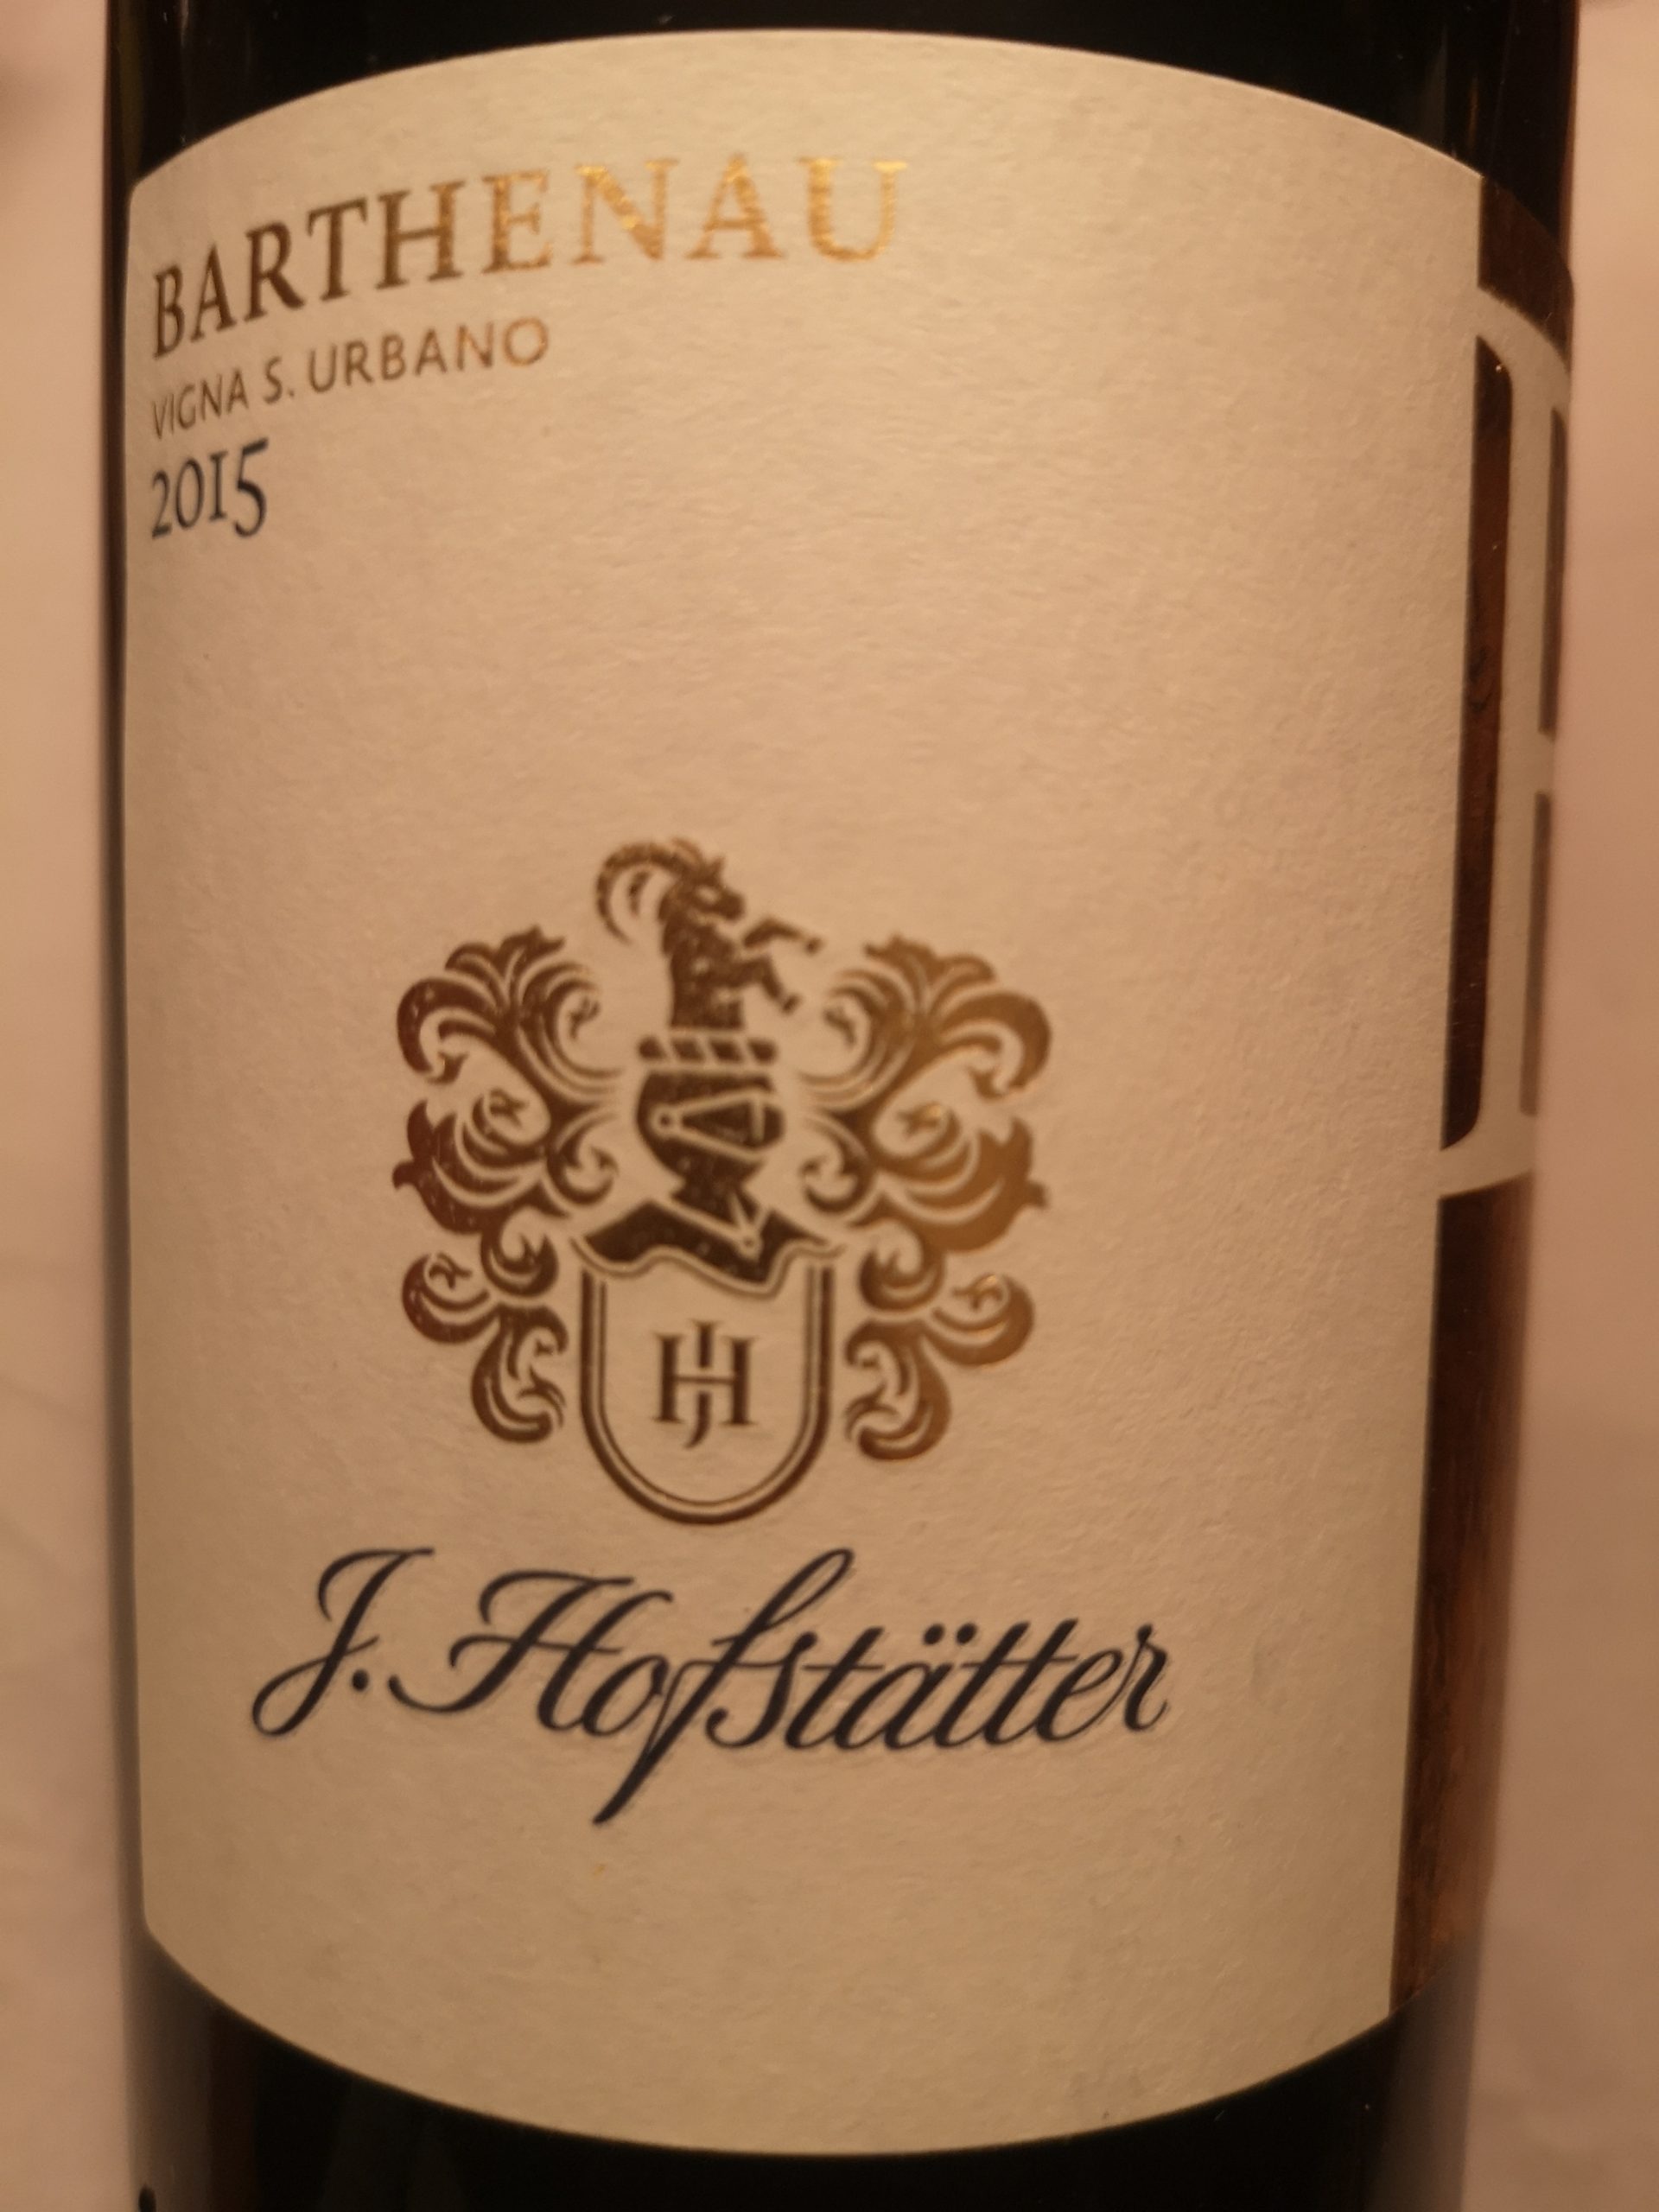 2015 Pinot Nero Barthenau | Höfstätter